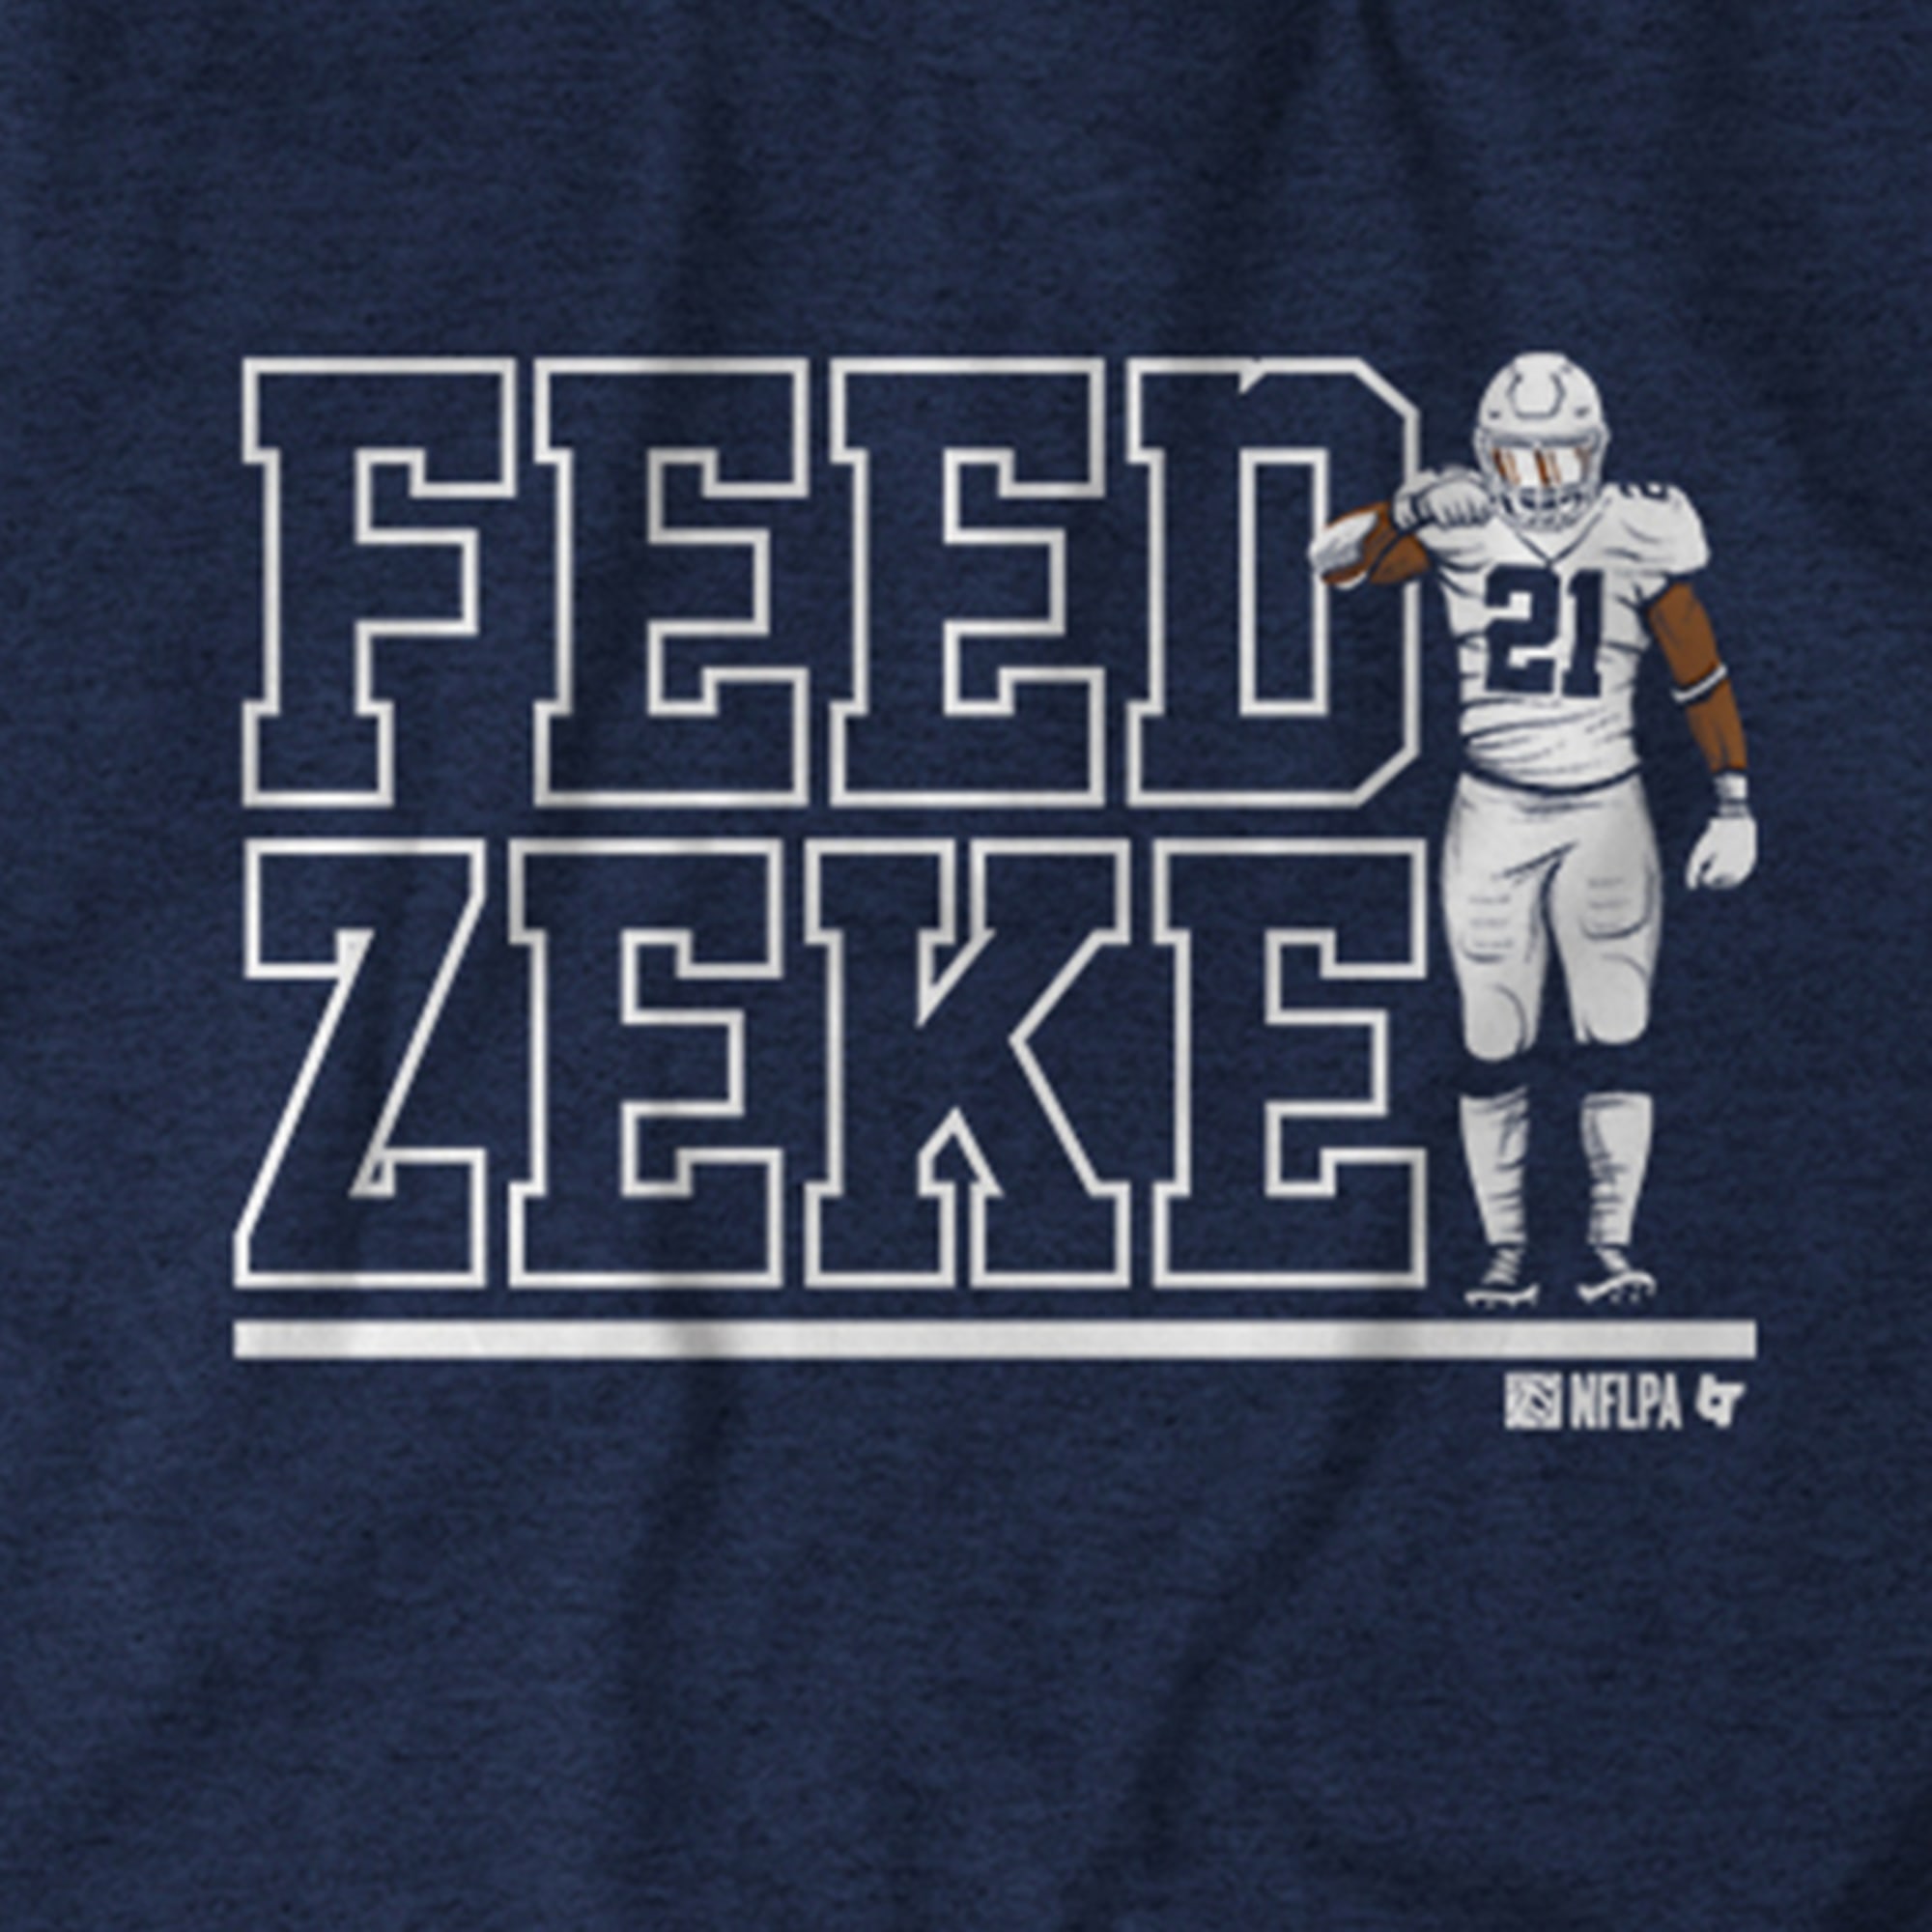 Dallas Cowboys fans need this Feed Zeke 